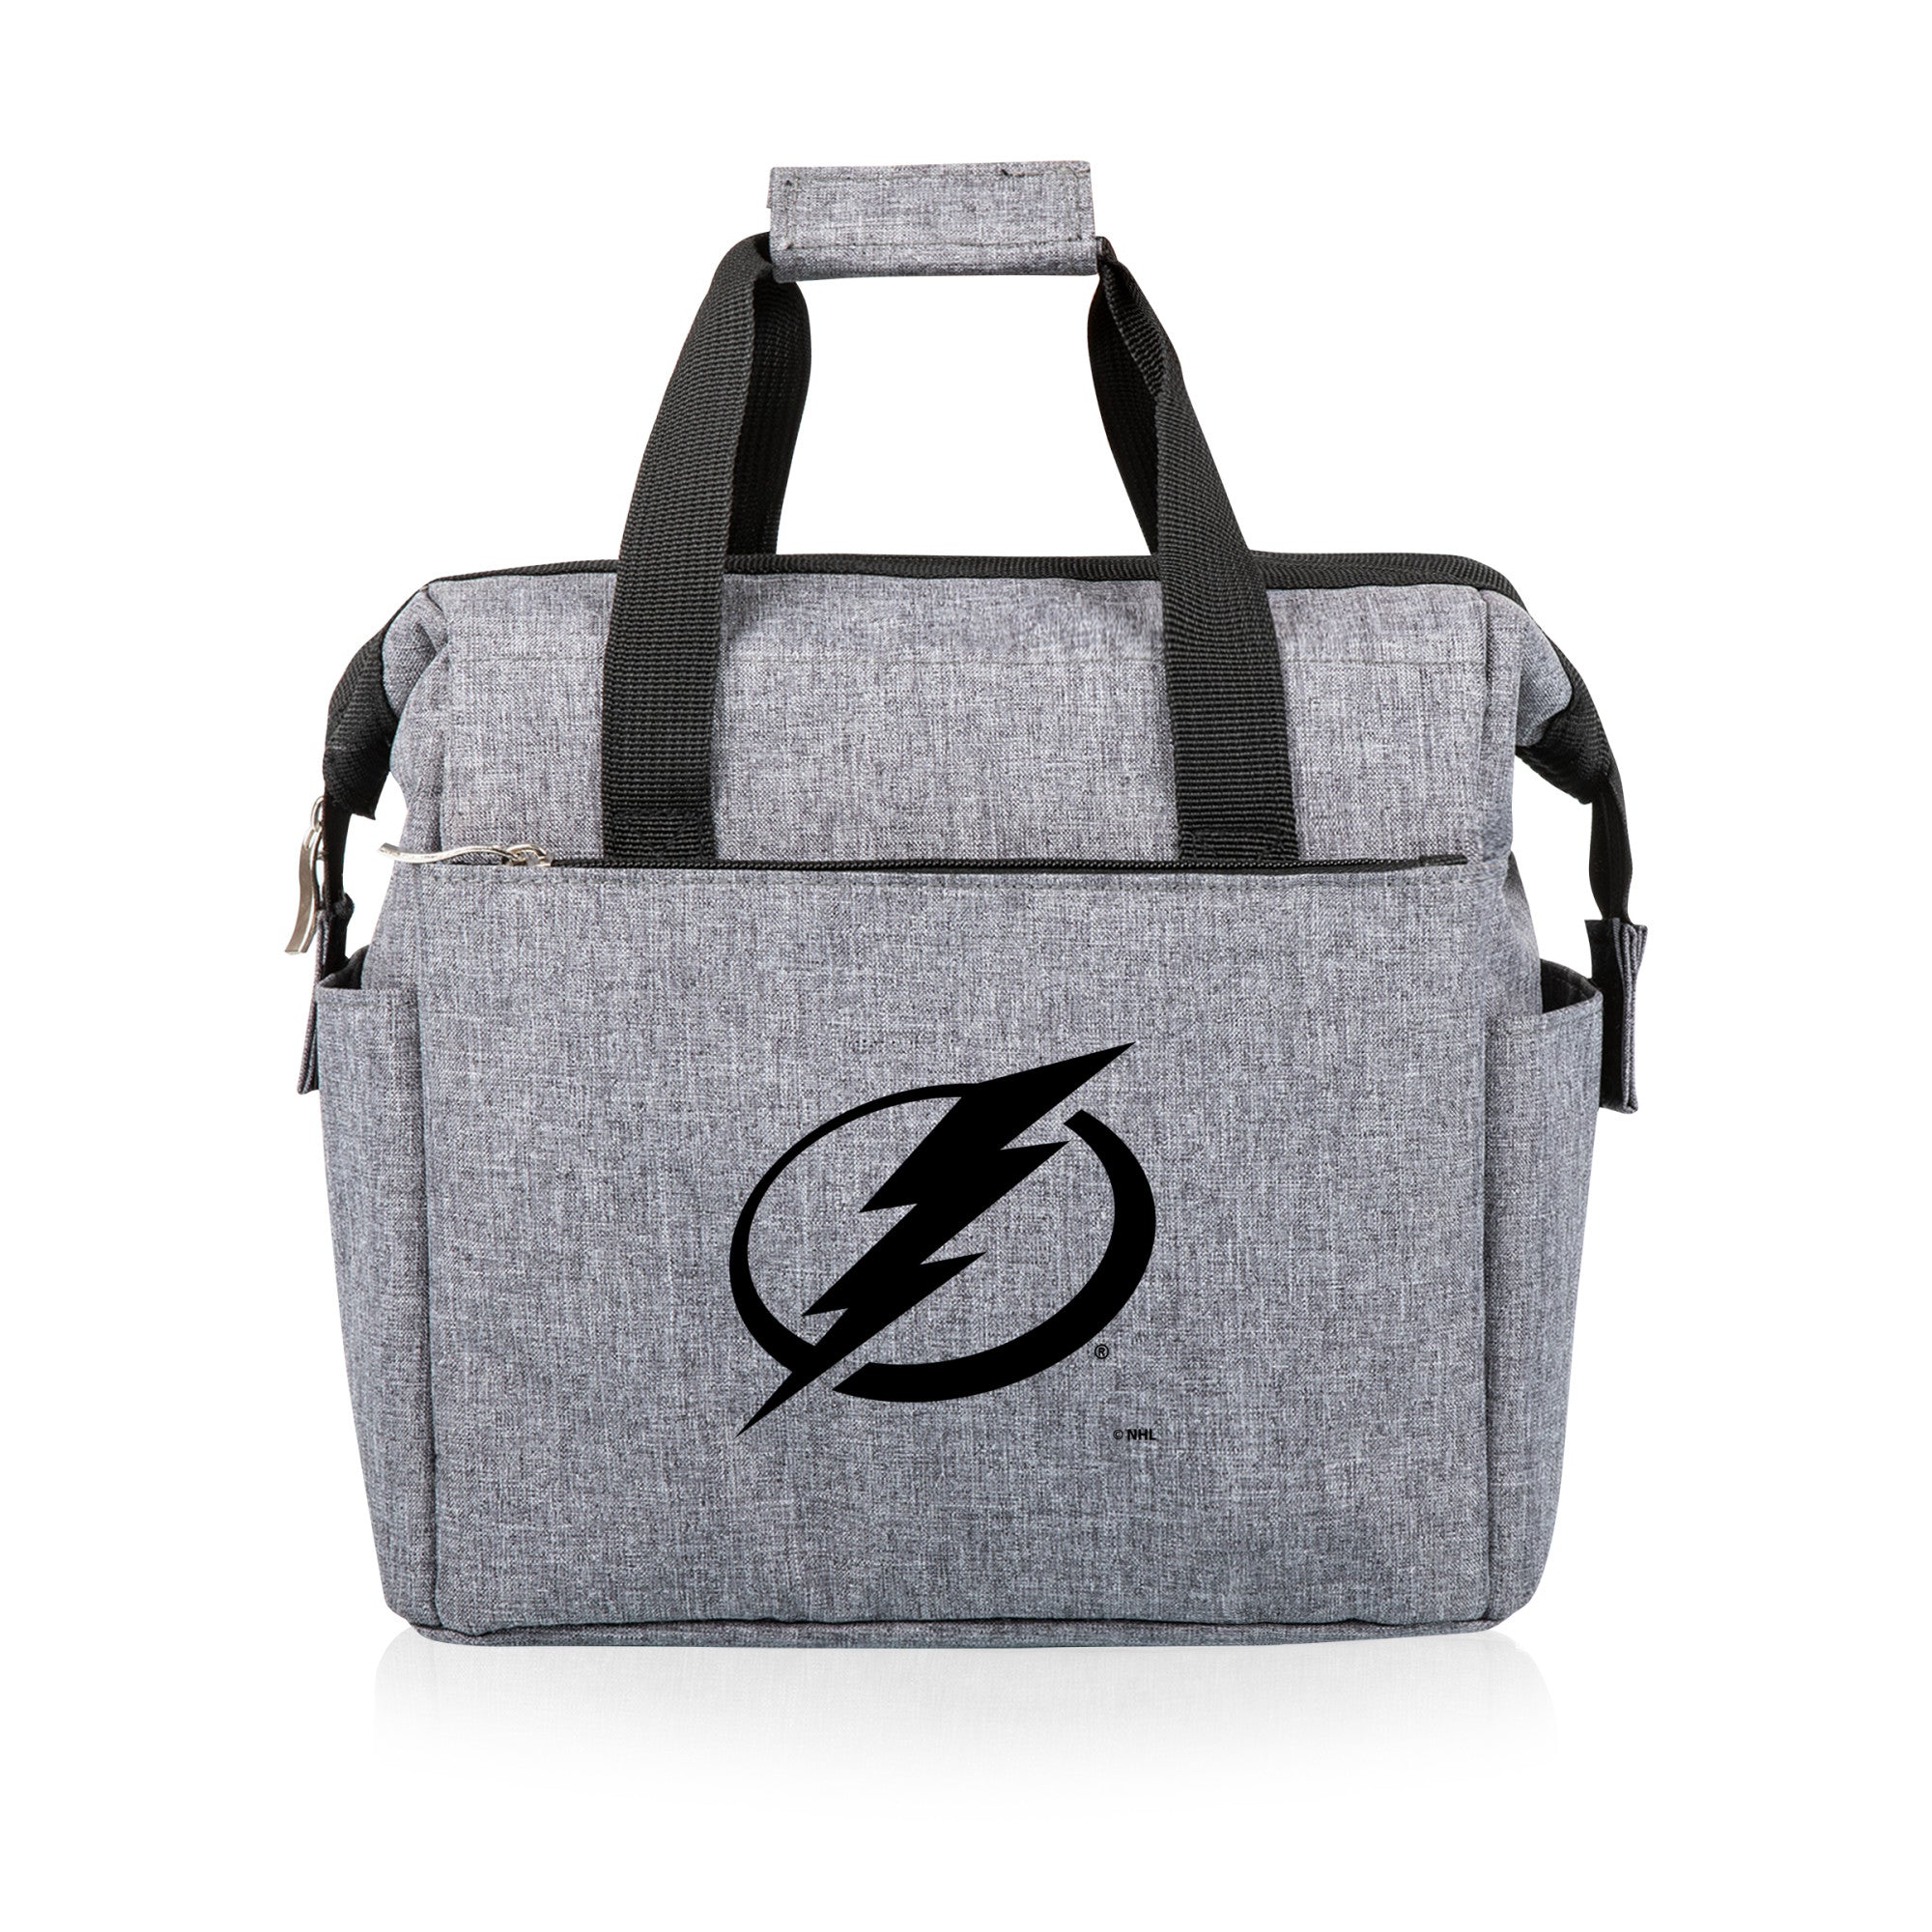 Tampa Bay Lightning - On The Go Lunch Bag Cooler